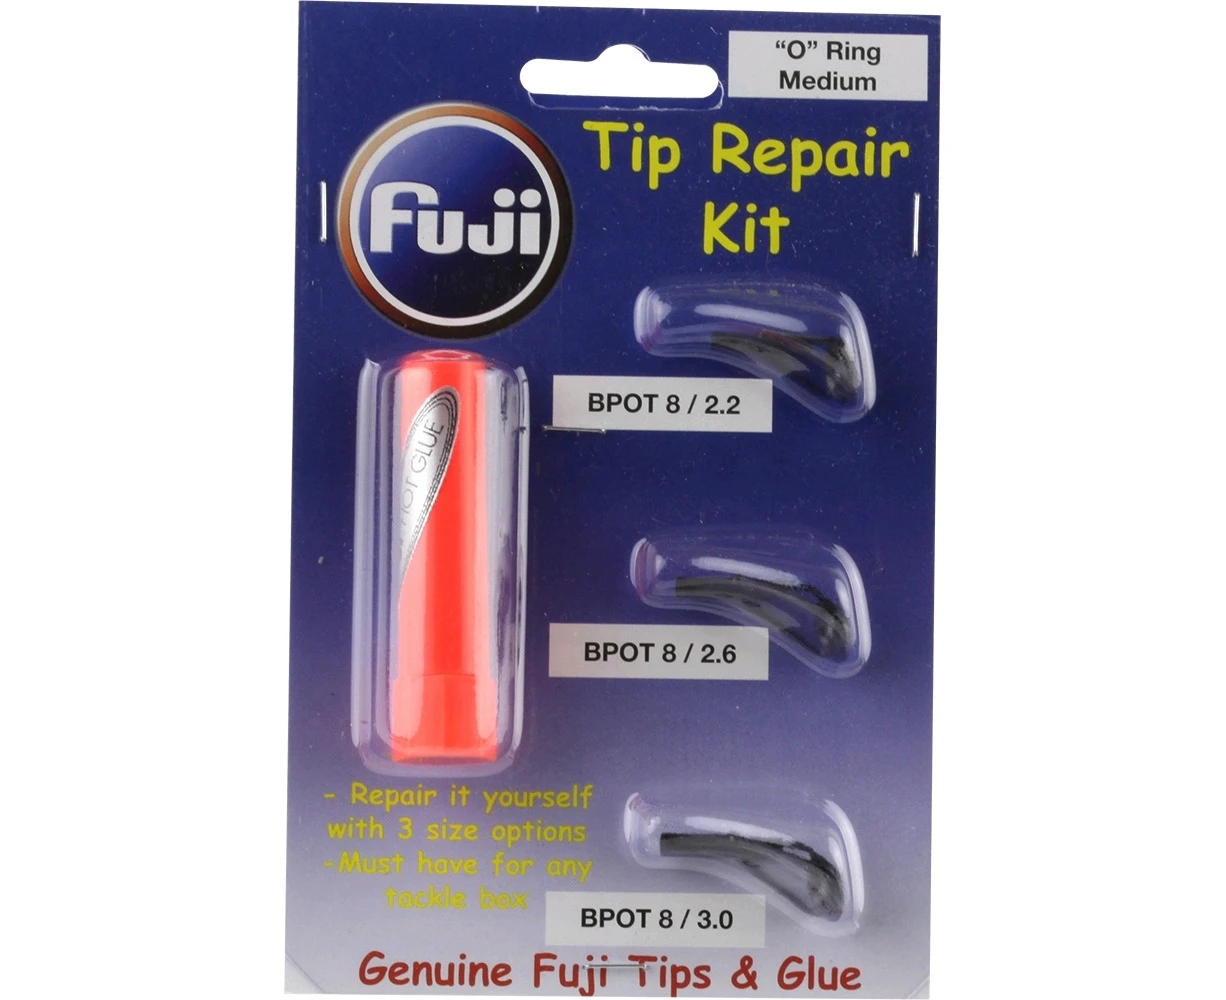 Berkley rod tip repair kit. How to use it! 